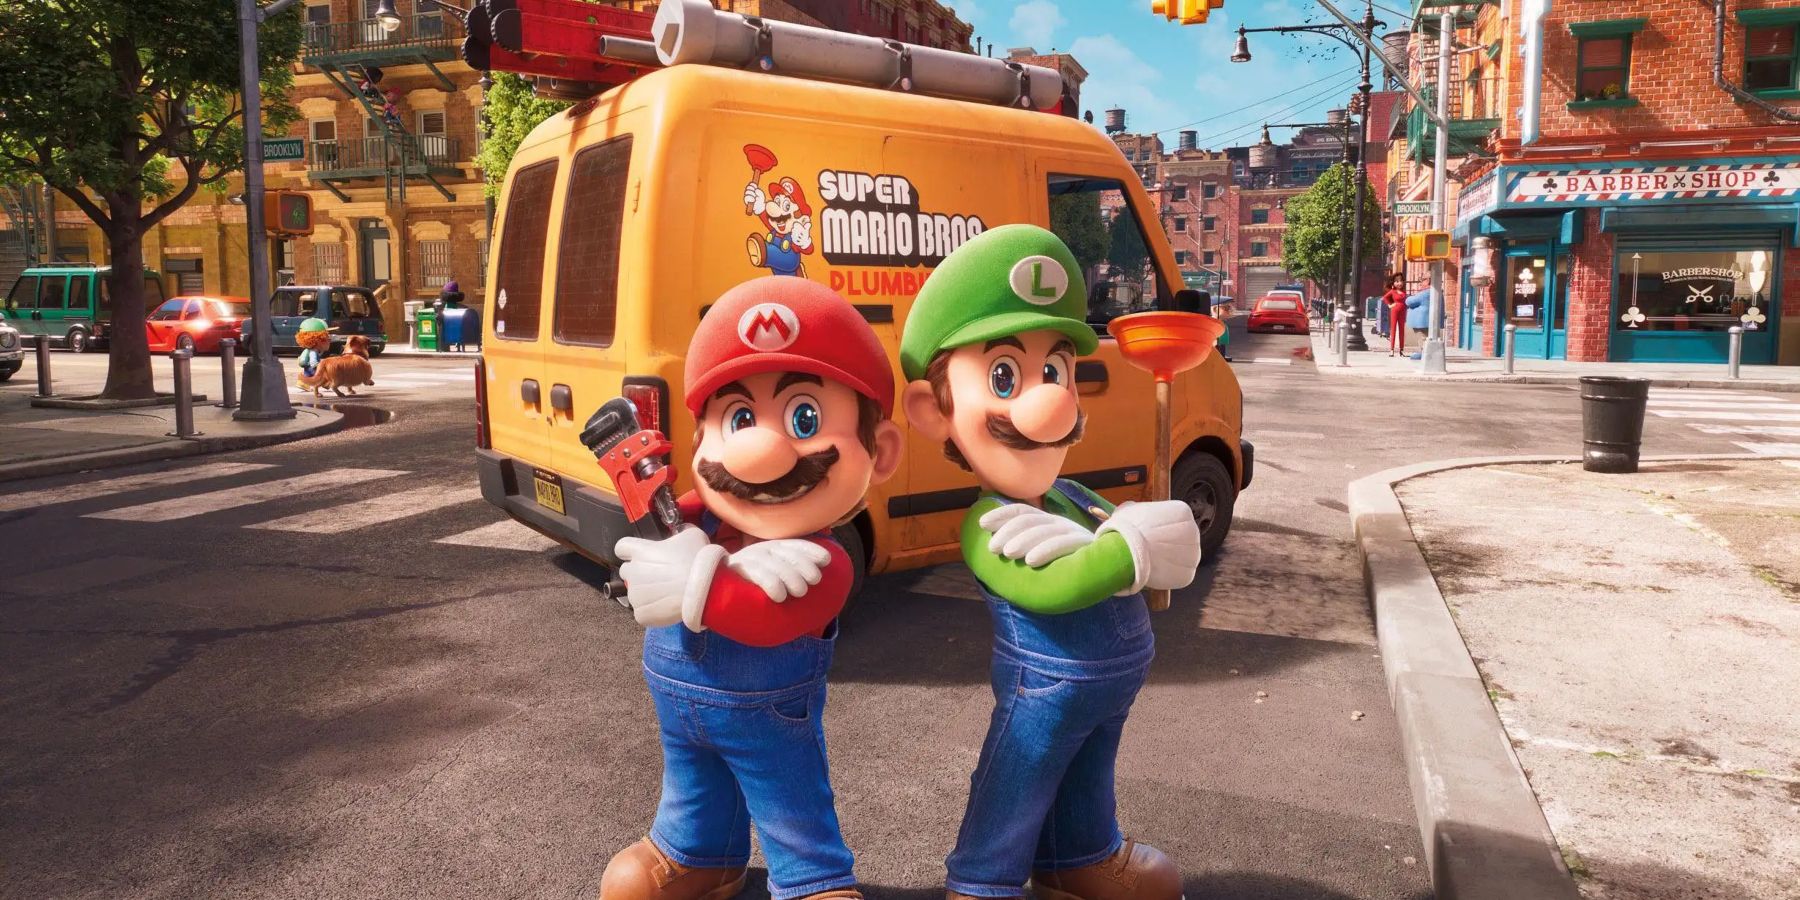 Tremendous Mario Bros. Film Chris Pratt Casting Defended By Director